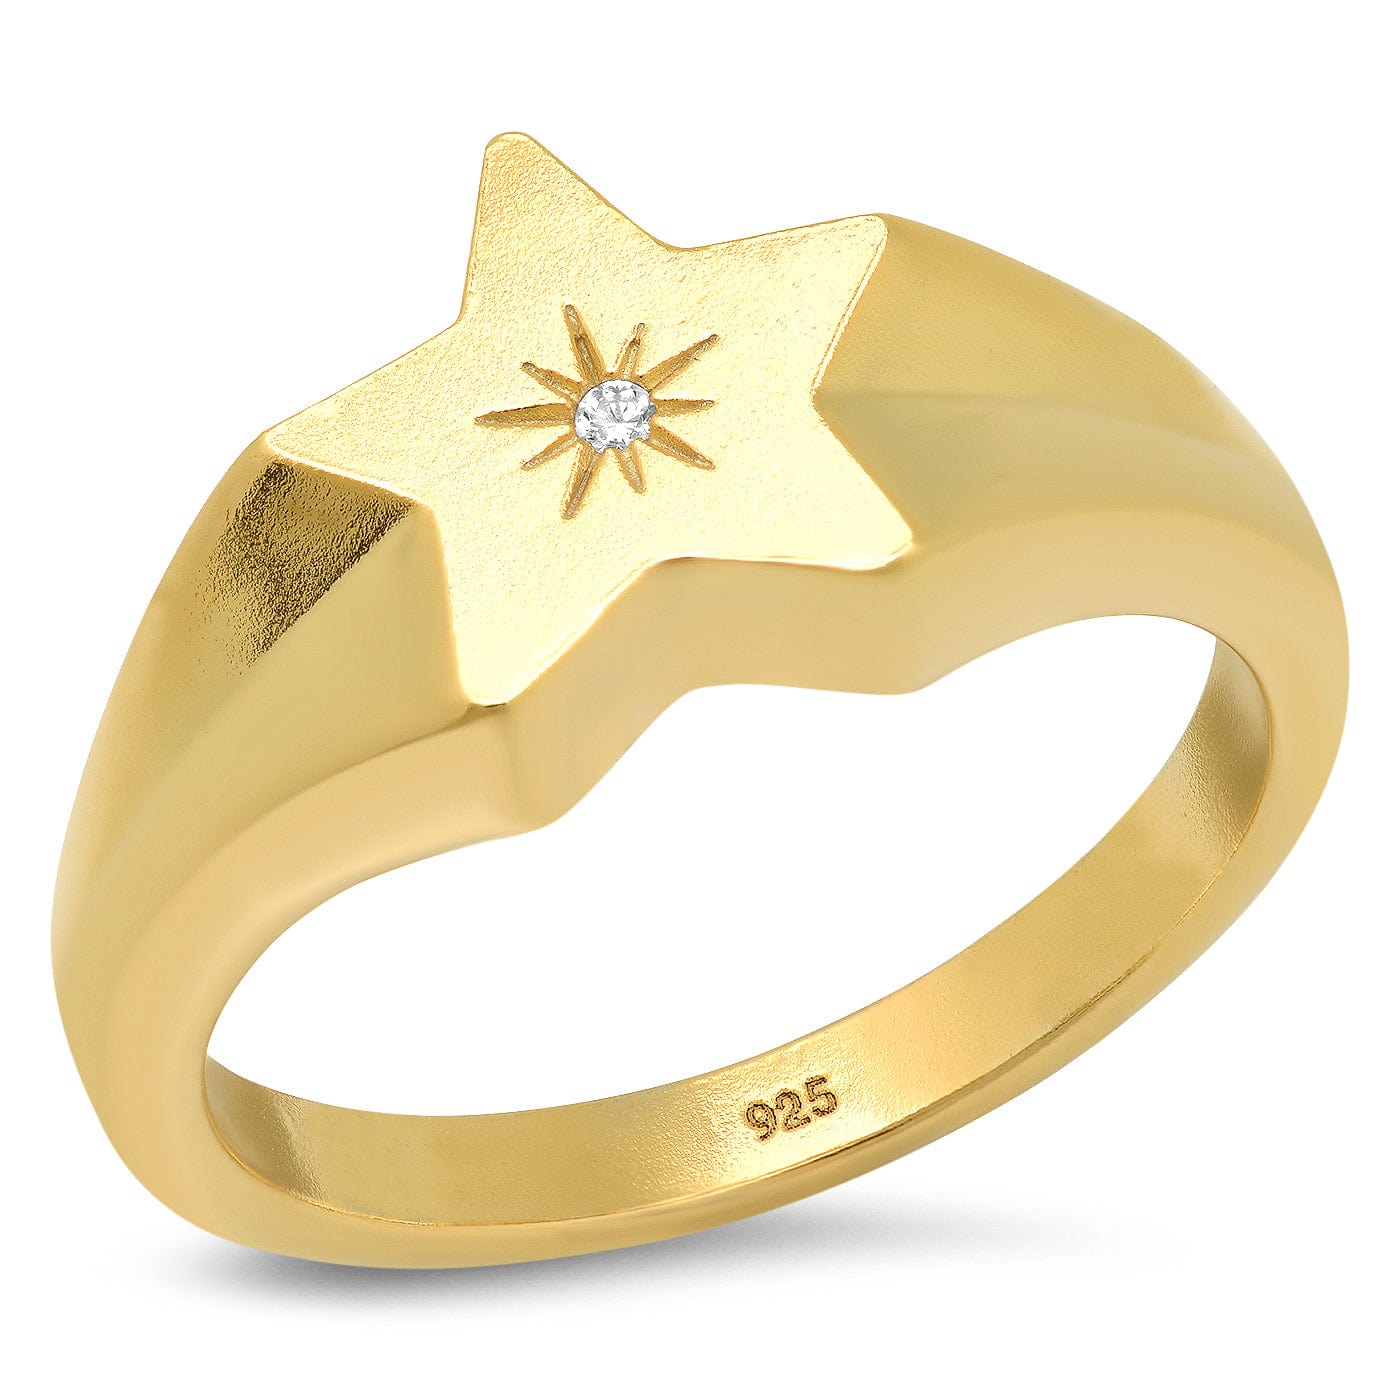 TAI JEWELRY Rings 6 Star Signet Ring